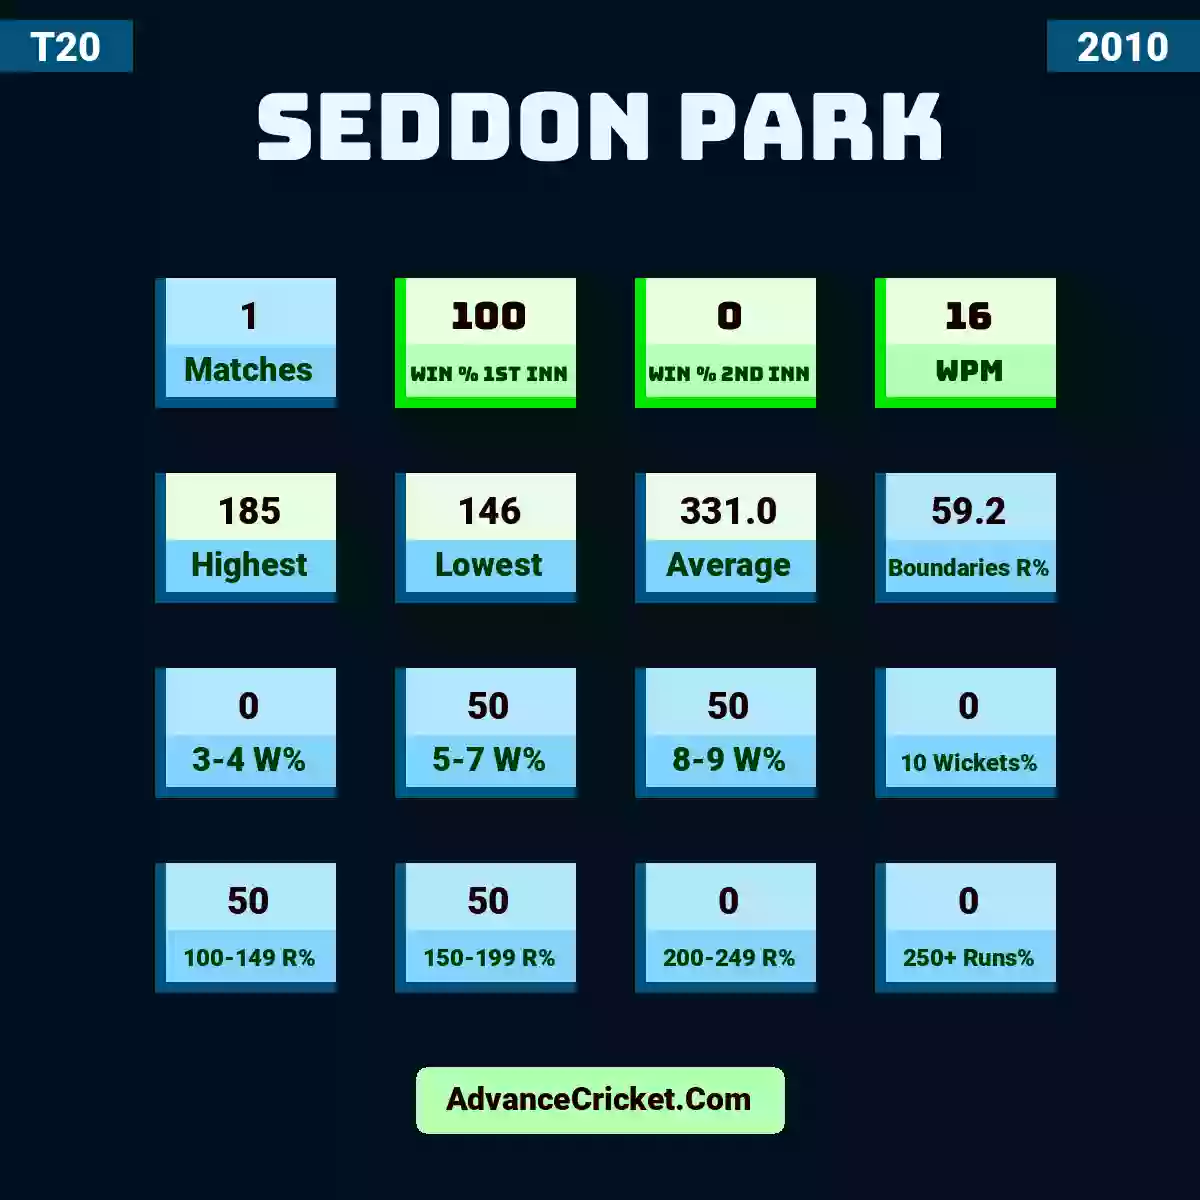 Image showing Seddon Park with Matches: 1, Win % 1st Inn: 100, Win % 2nd Inn: 0, WPM: 16, Highest: 185, Lowest: 146, Average: 331.0, Boundaries R%: 59.2, 3-4 W%: 0, 5-7 W%: 50, 8-9 W%: 50, 10 Wickets%: 0, 100-149 R%: 50, 150-199 R%: 50, 200-249 R%: 0, 250+ Runs%: 0.